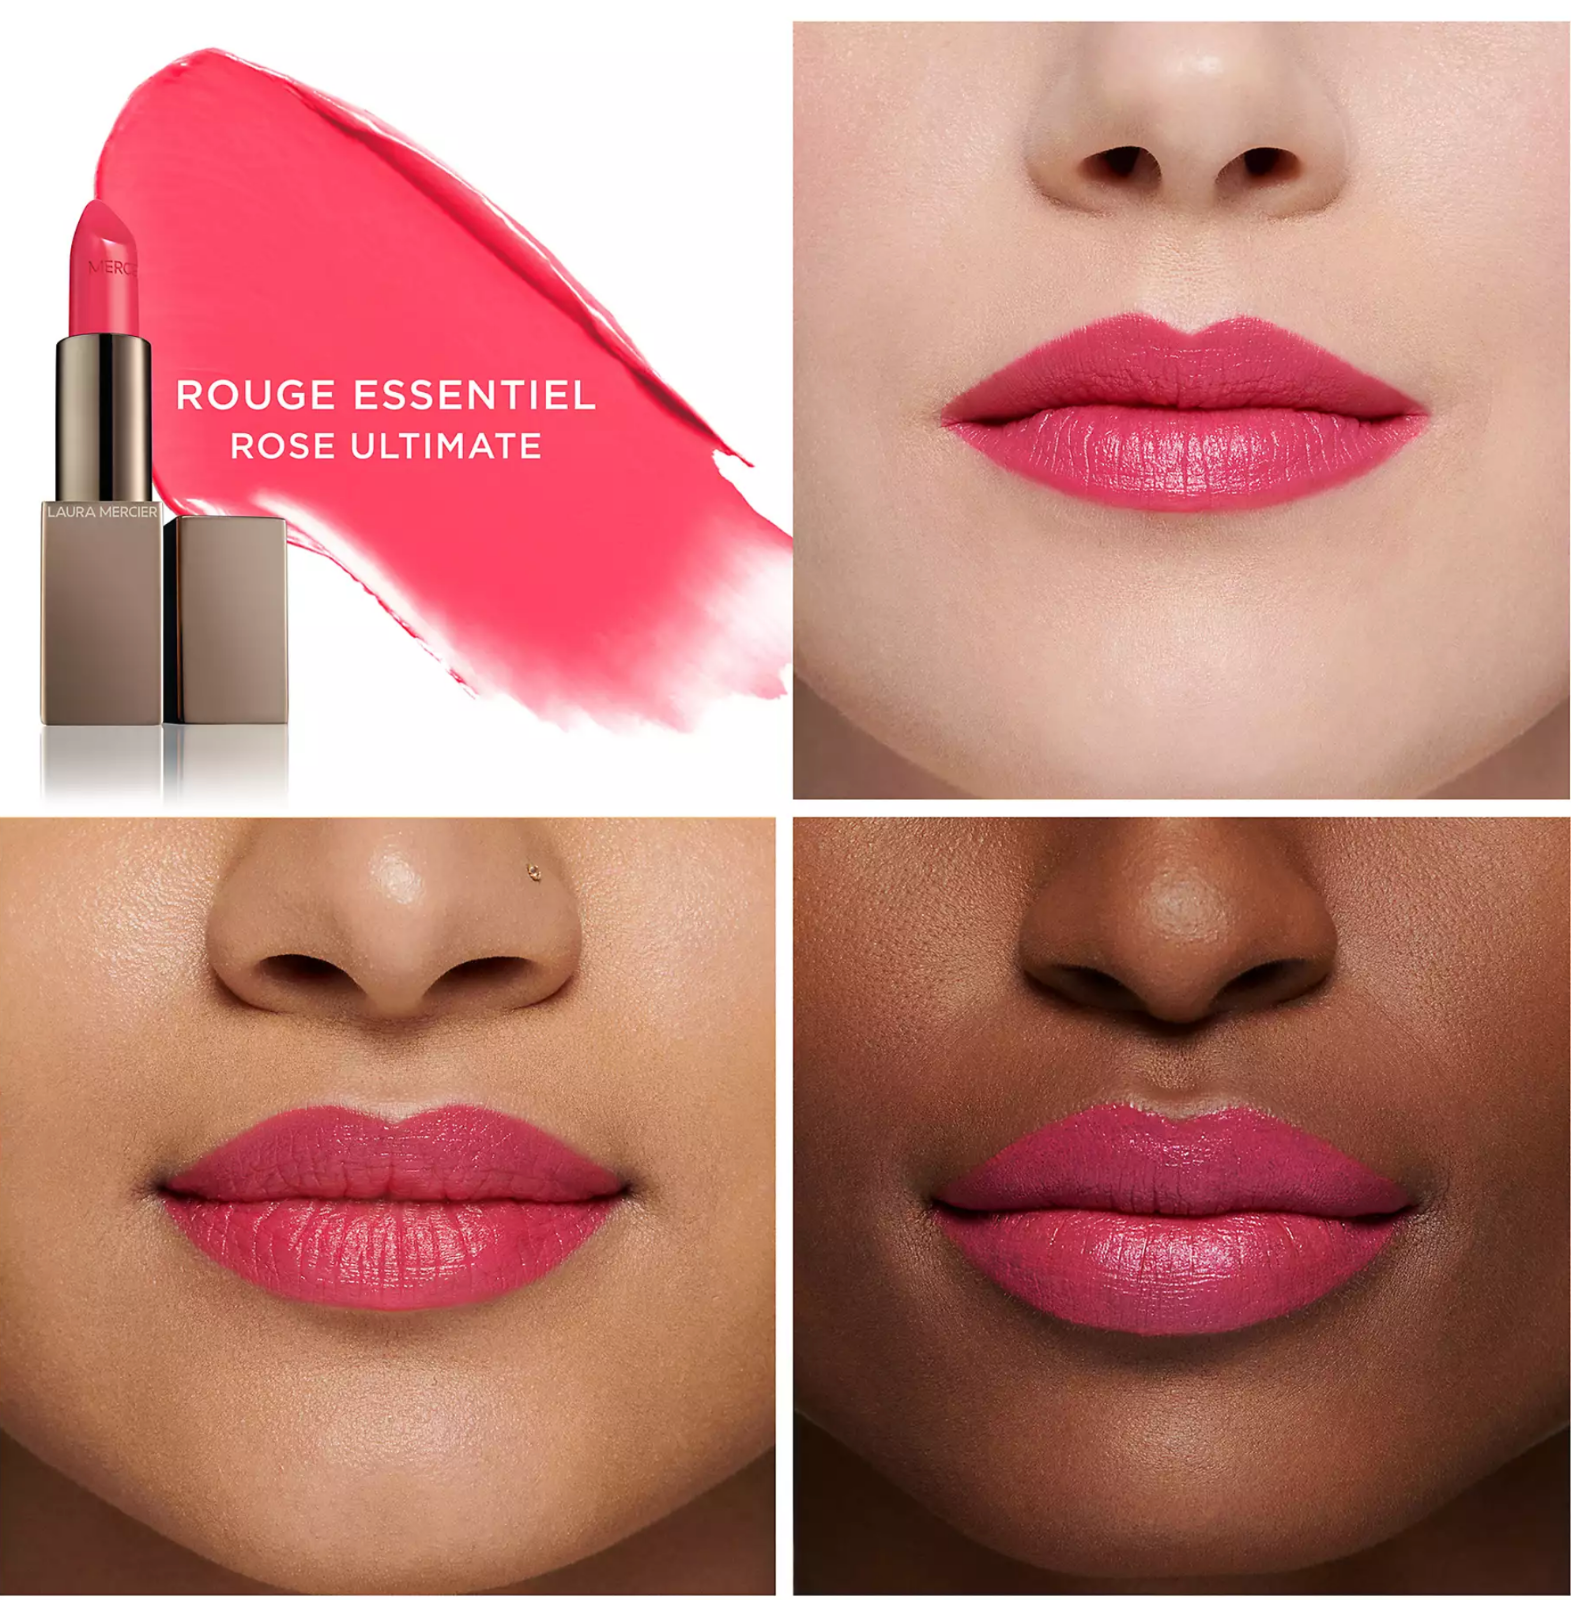 Laura Mercier Rouge Essentiel Silky Creme Lipstick 3,5g - Rose Ultimate